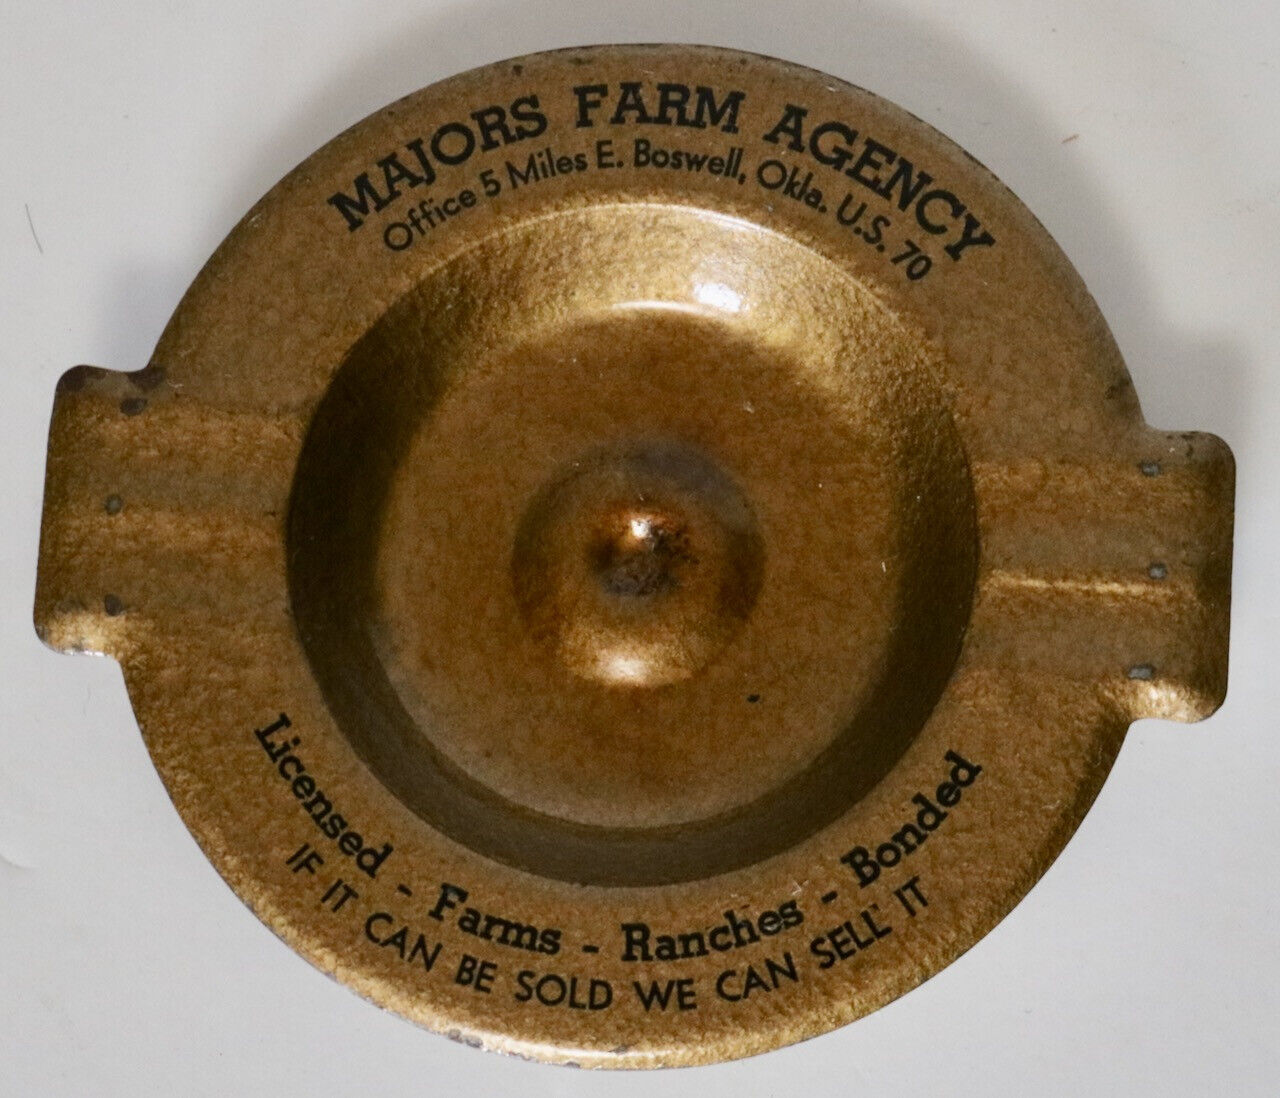 MAJORS FARM AGENCY Oklahoma vintage metal advertising ashtray